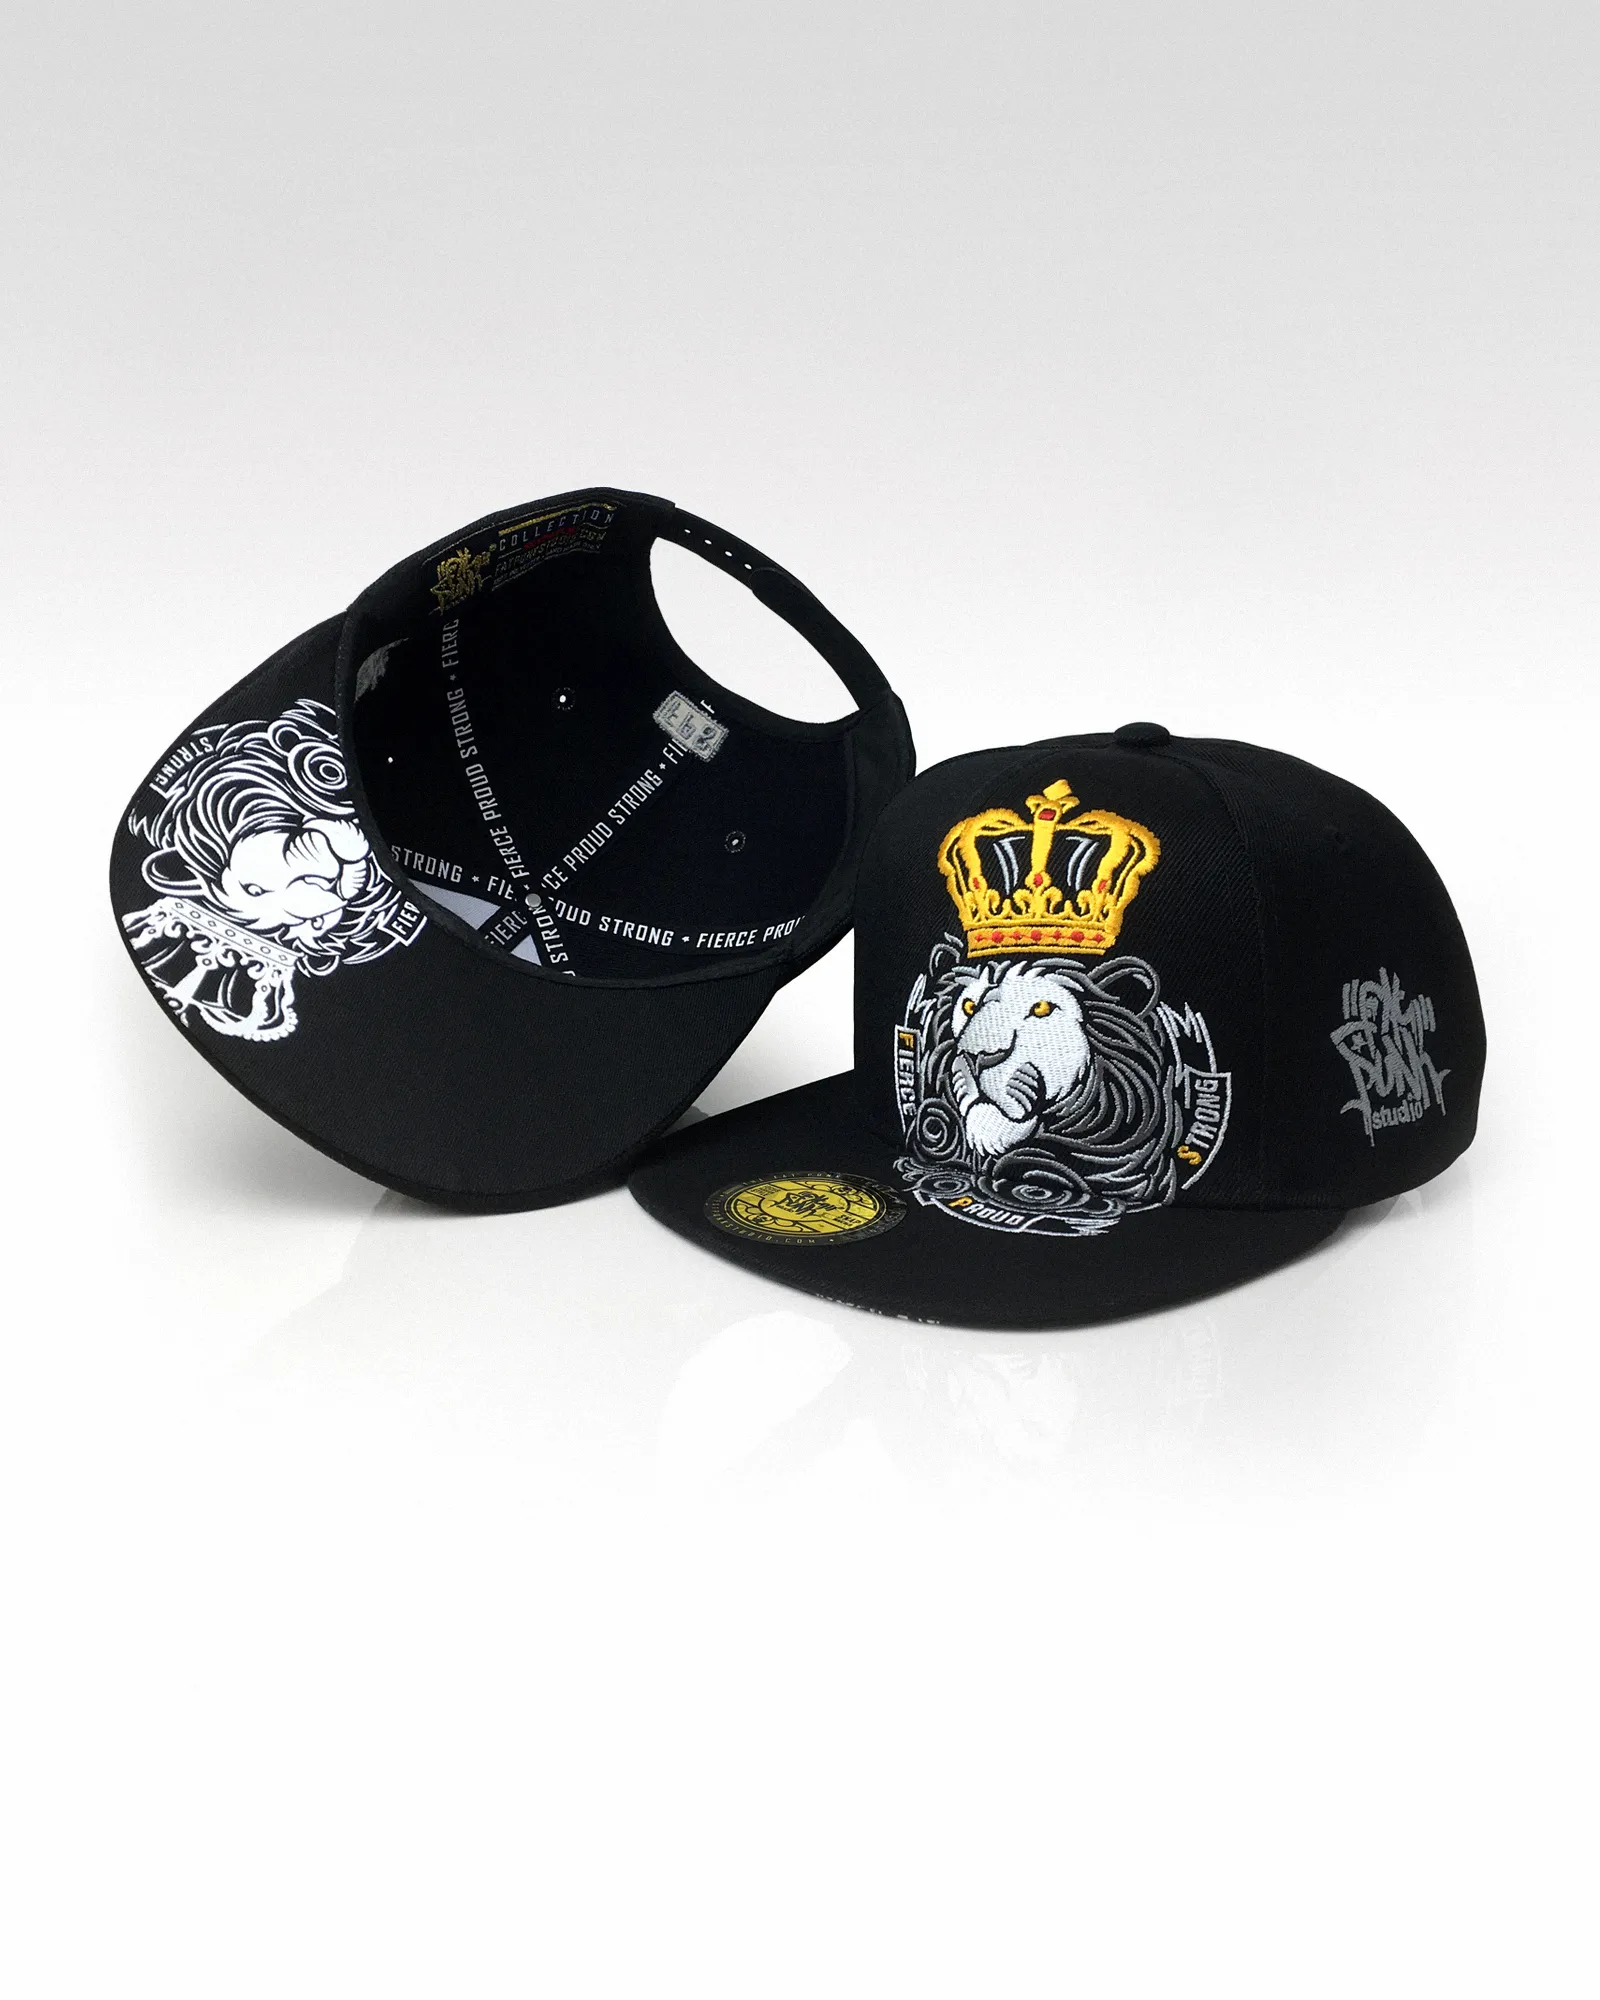 Fat Punk Studio embroidered King Lion cap